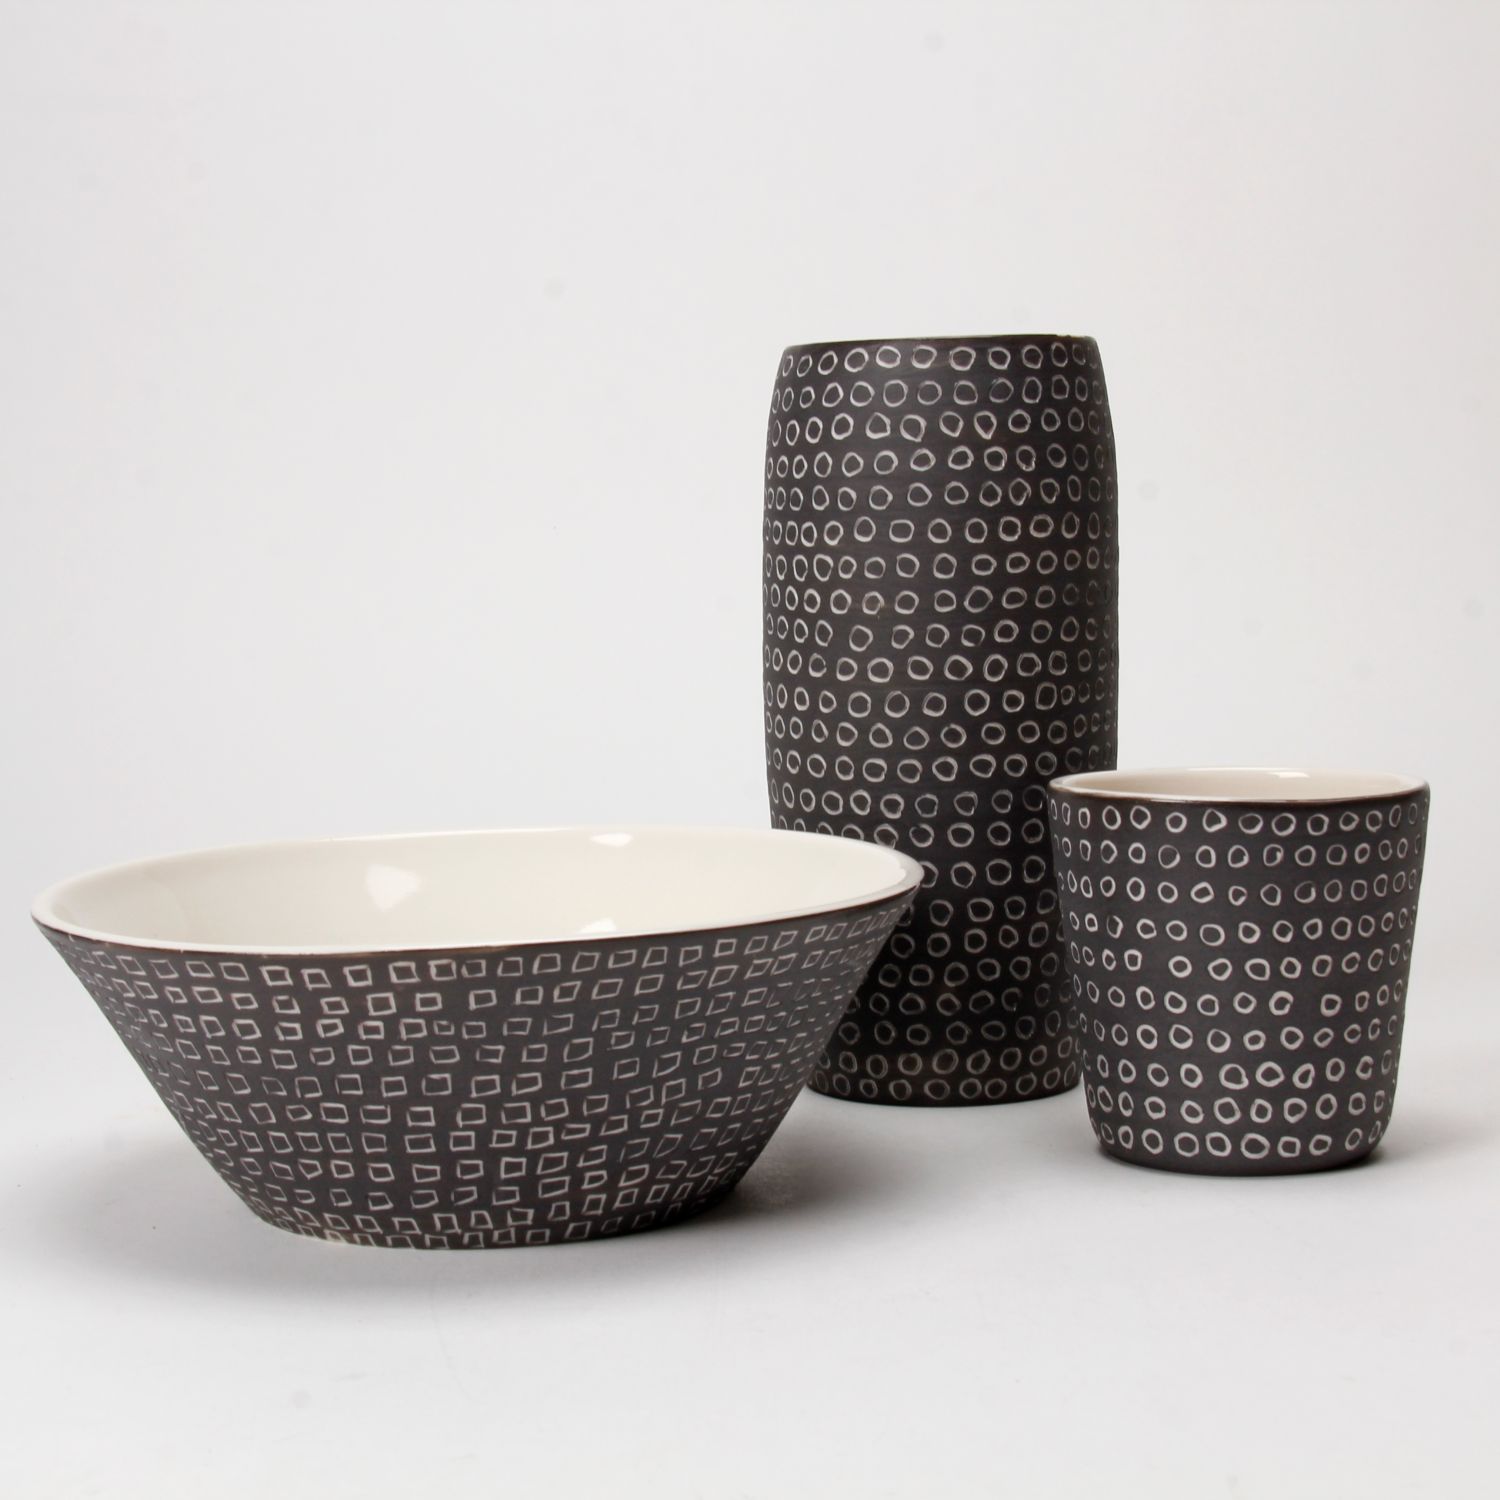 Cuir Ceramics: Black and White Tumbler Product Image 3 of 4